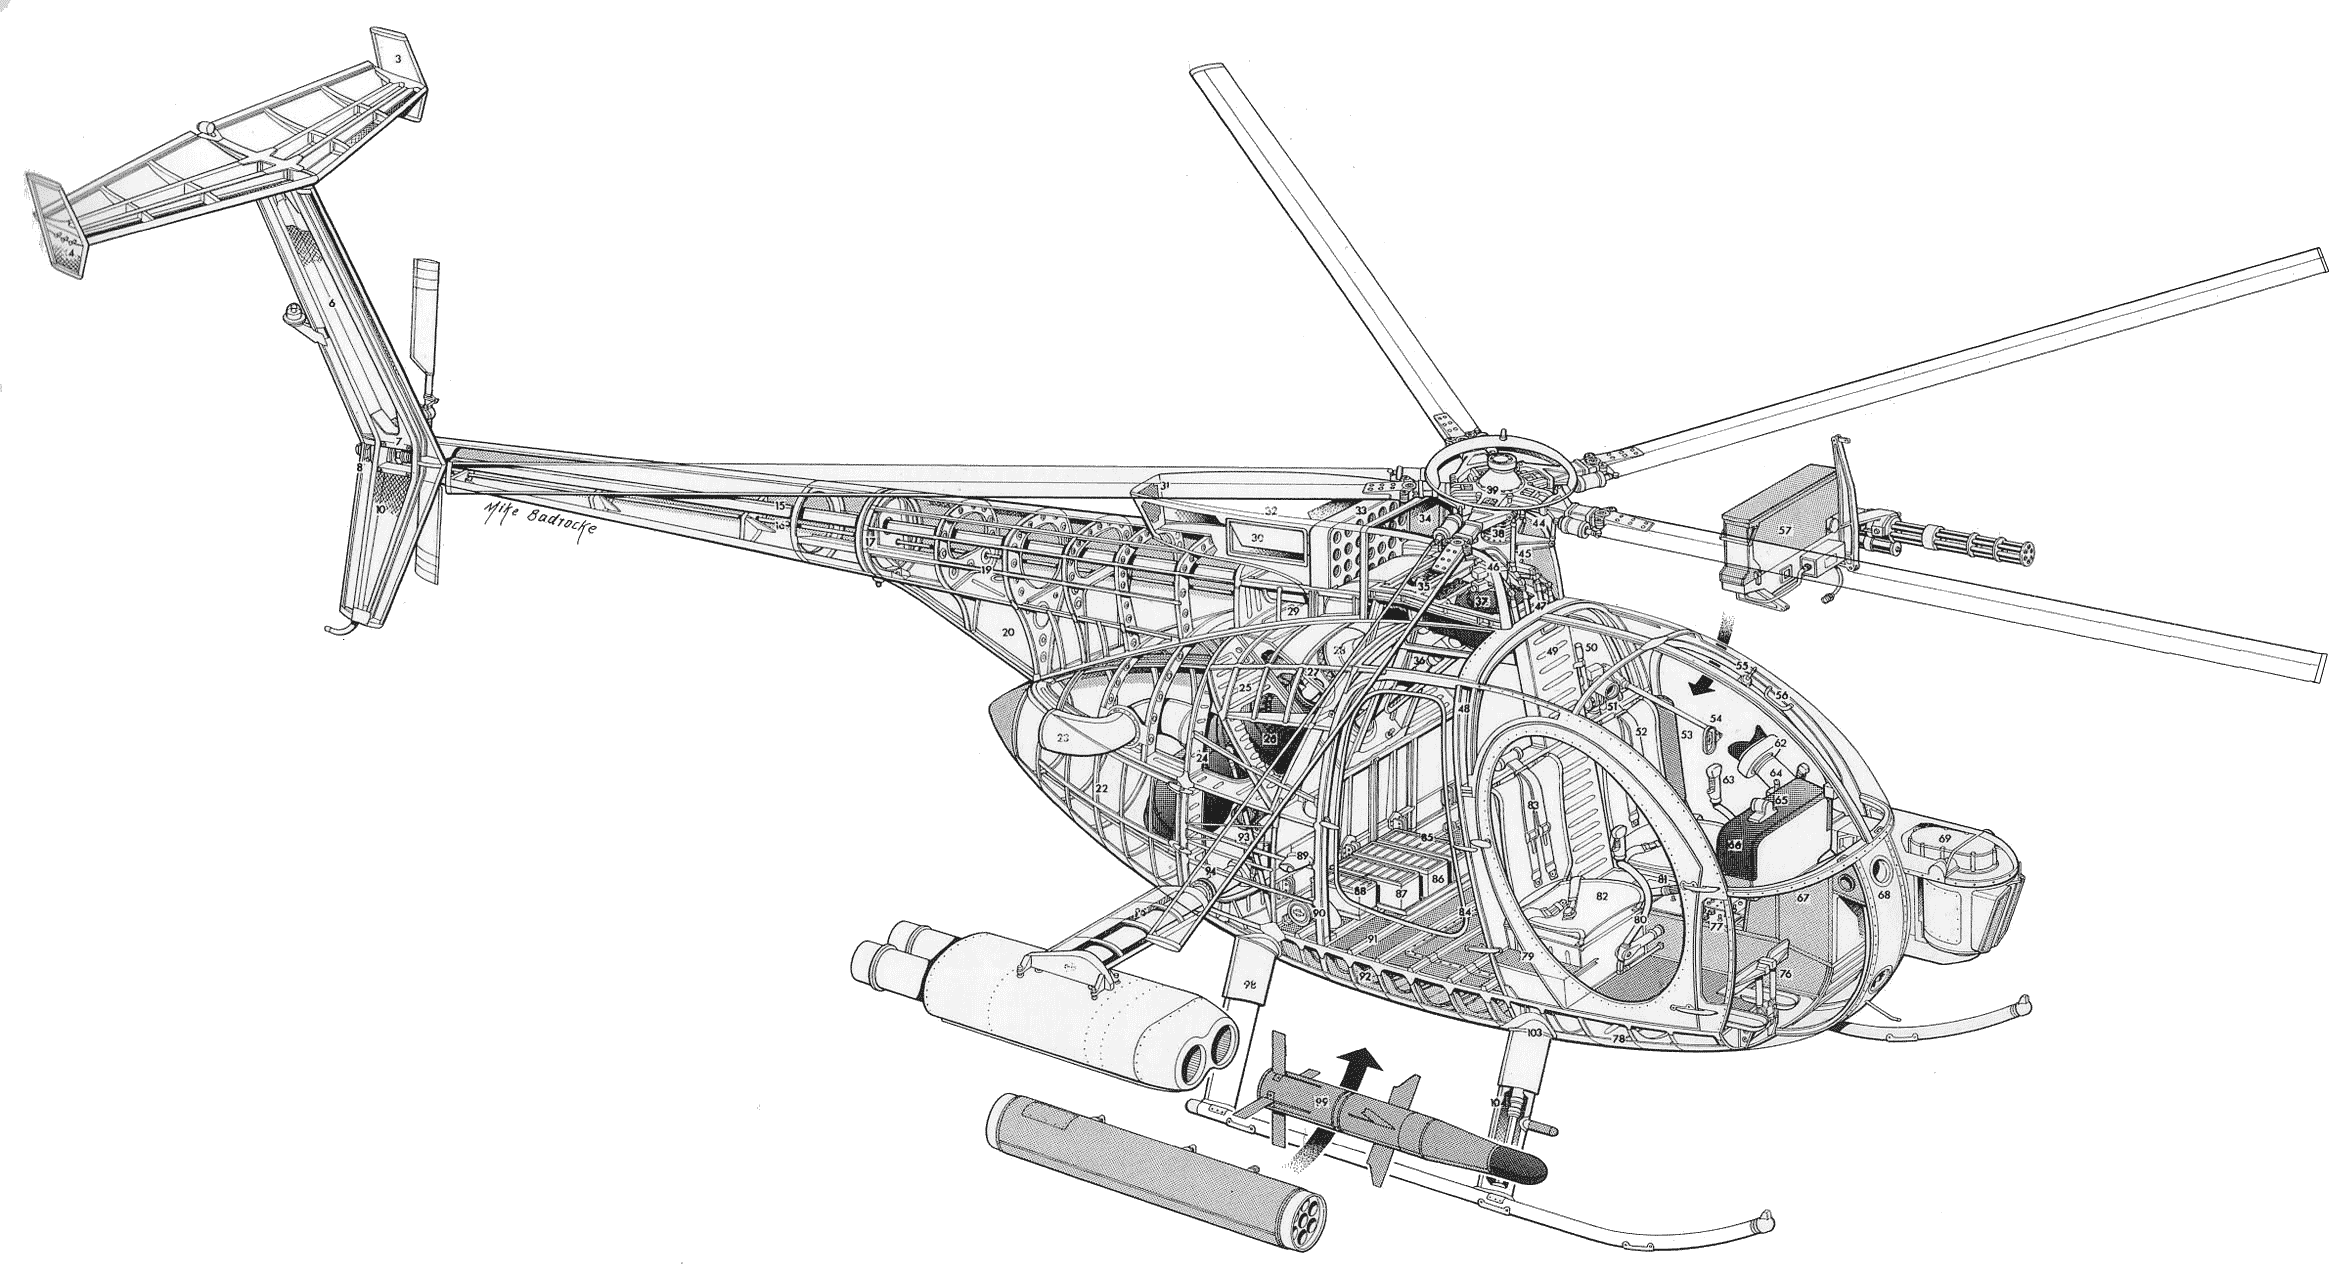 Hughes OH-6 Cayuse cutaway drawing